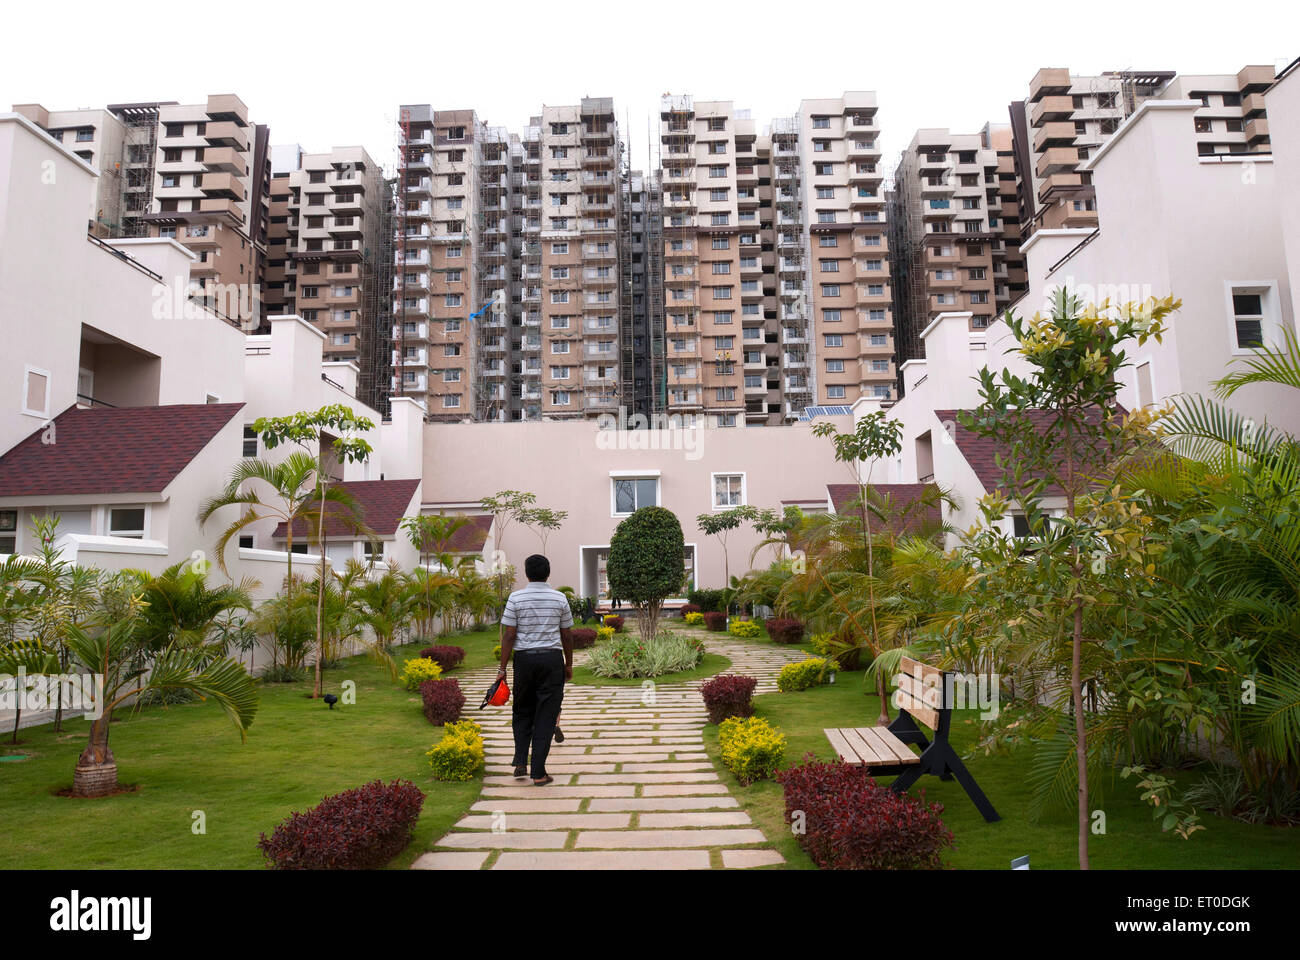 Apartments complex buildings skyscrapers gardens ; Bangalore ; Bengaluru ; Karnataka ; India Stock Photo